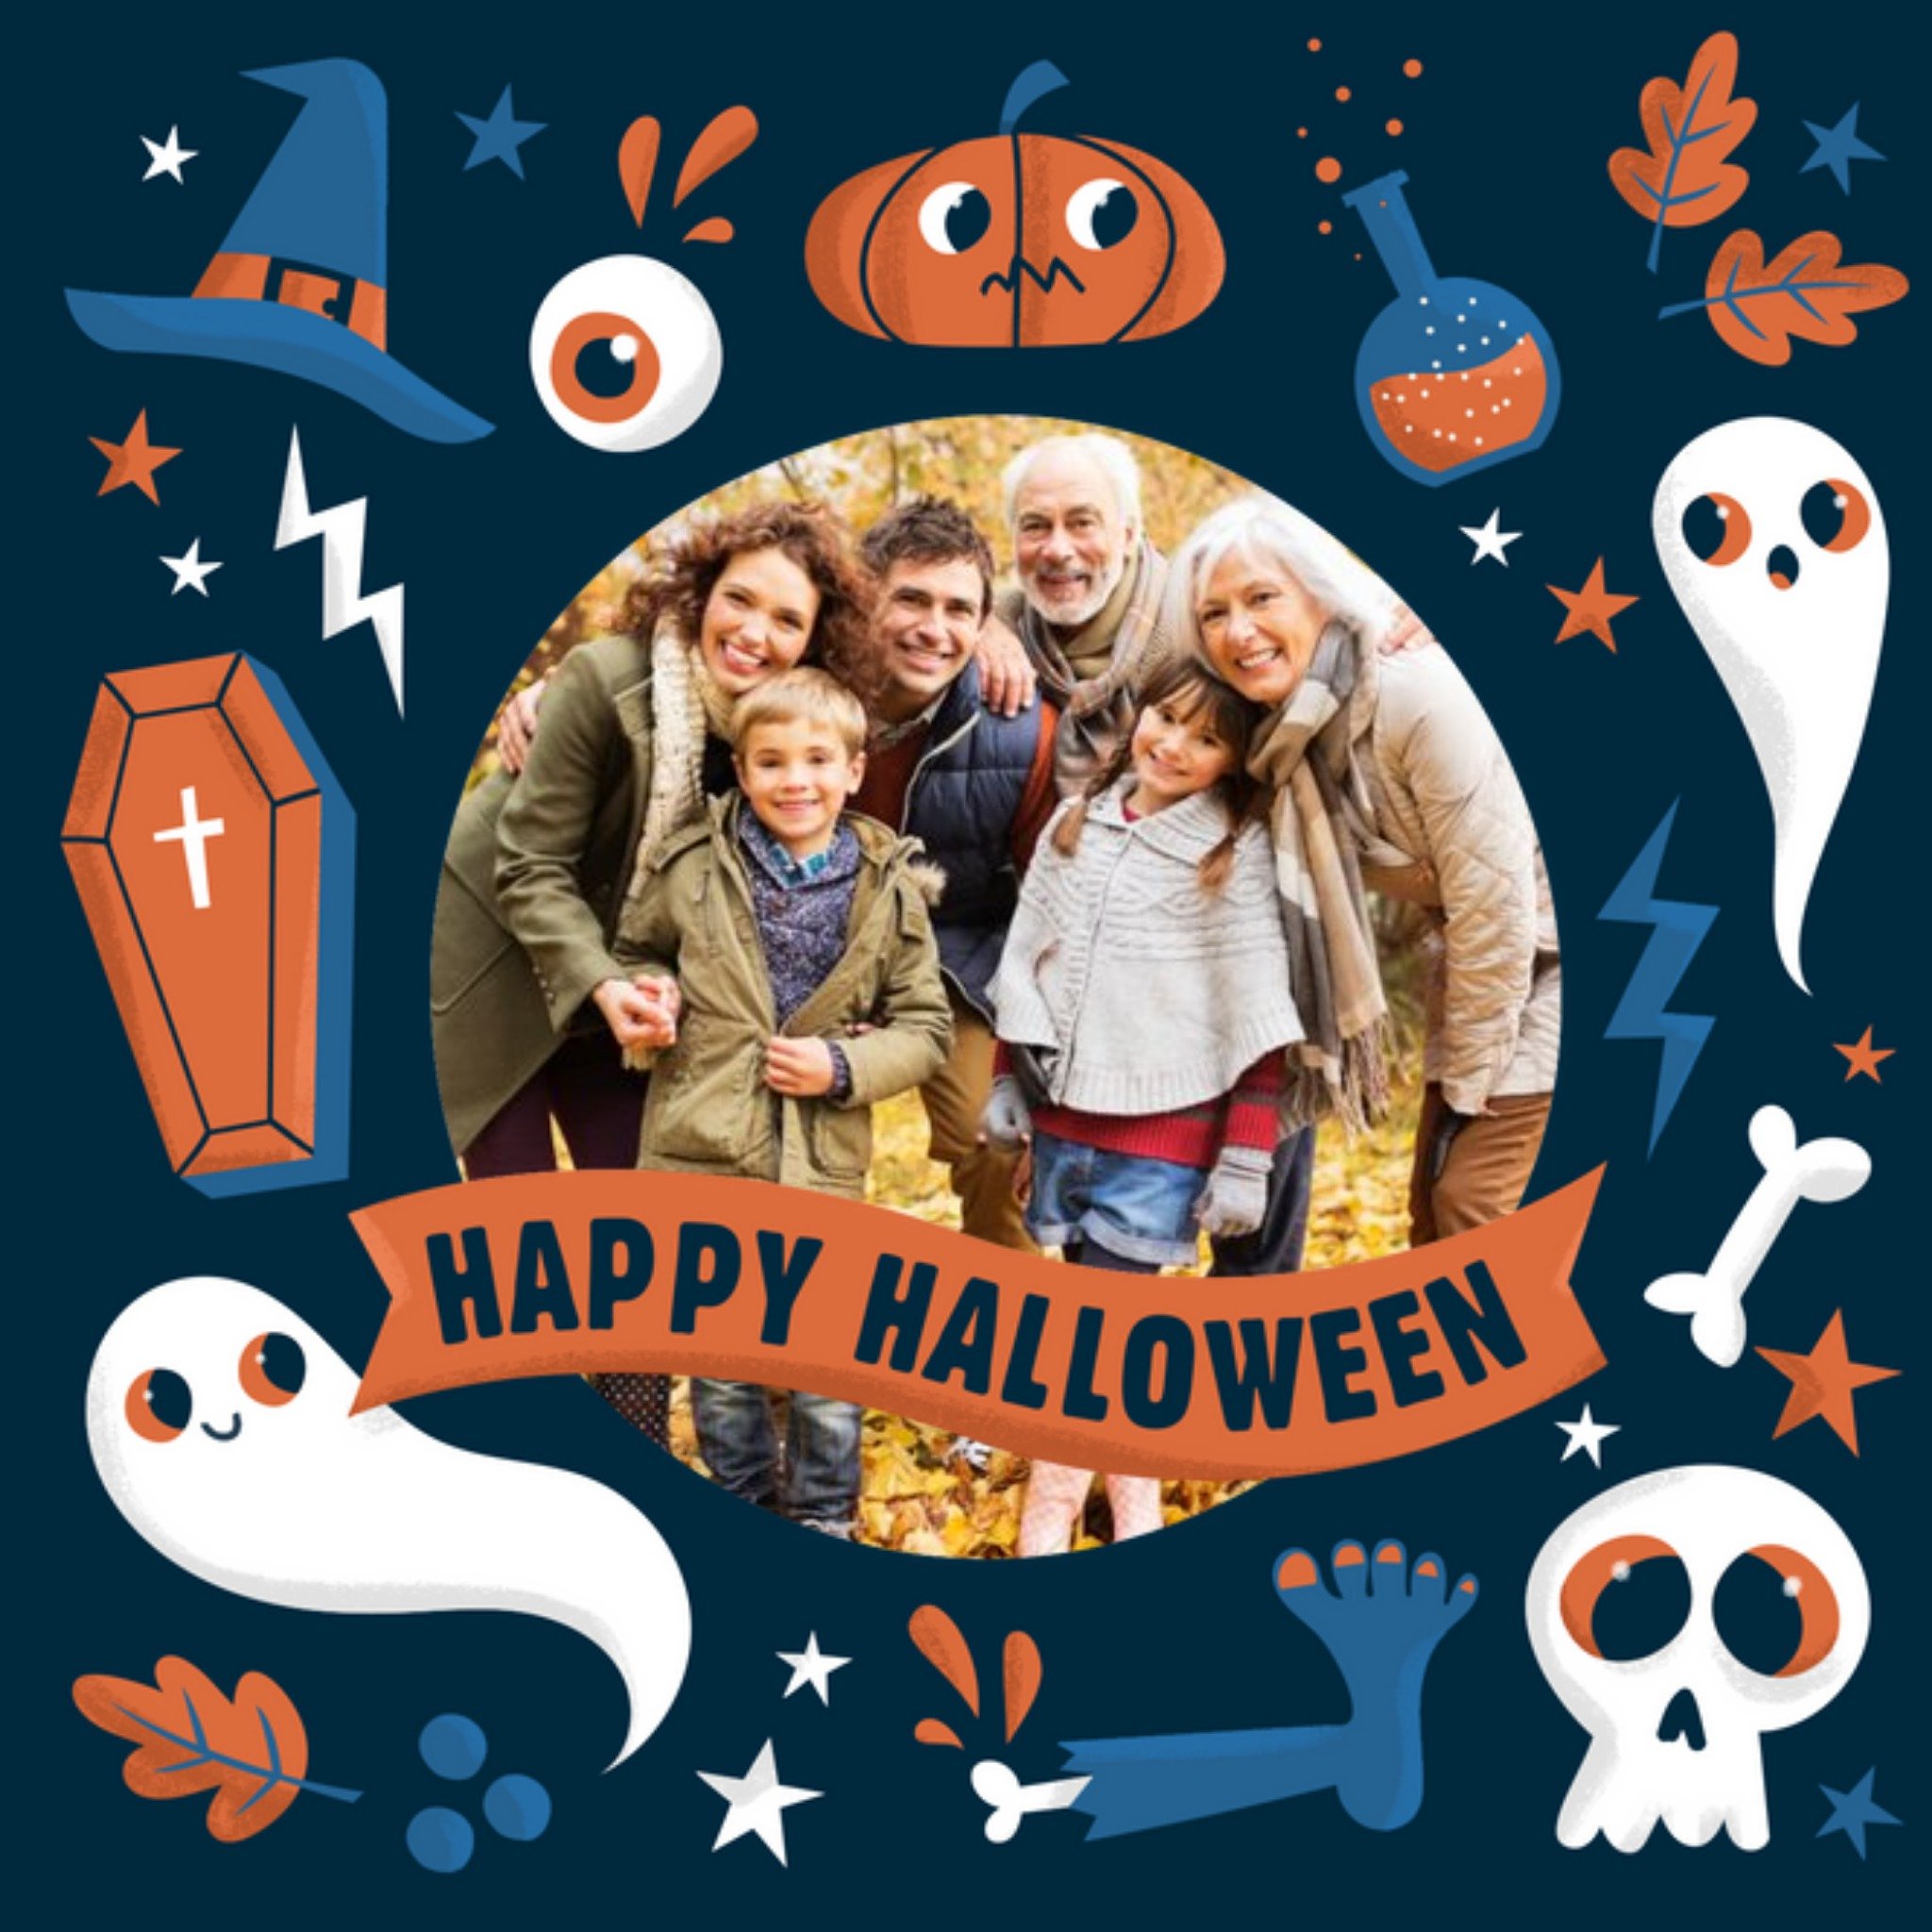 Moonpig Bright Fun Halloween Illustrations Happy Halloween Photo Upload Card, Square